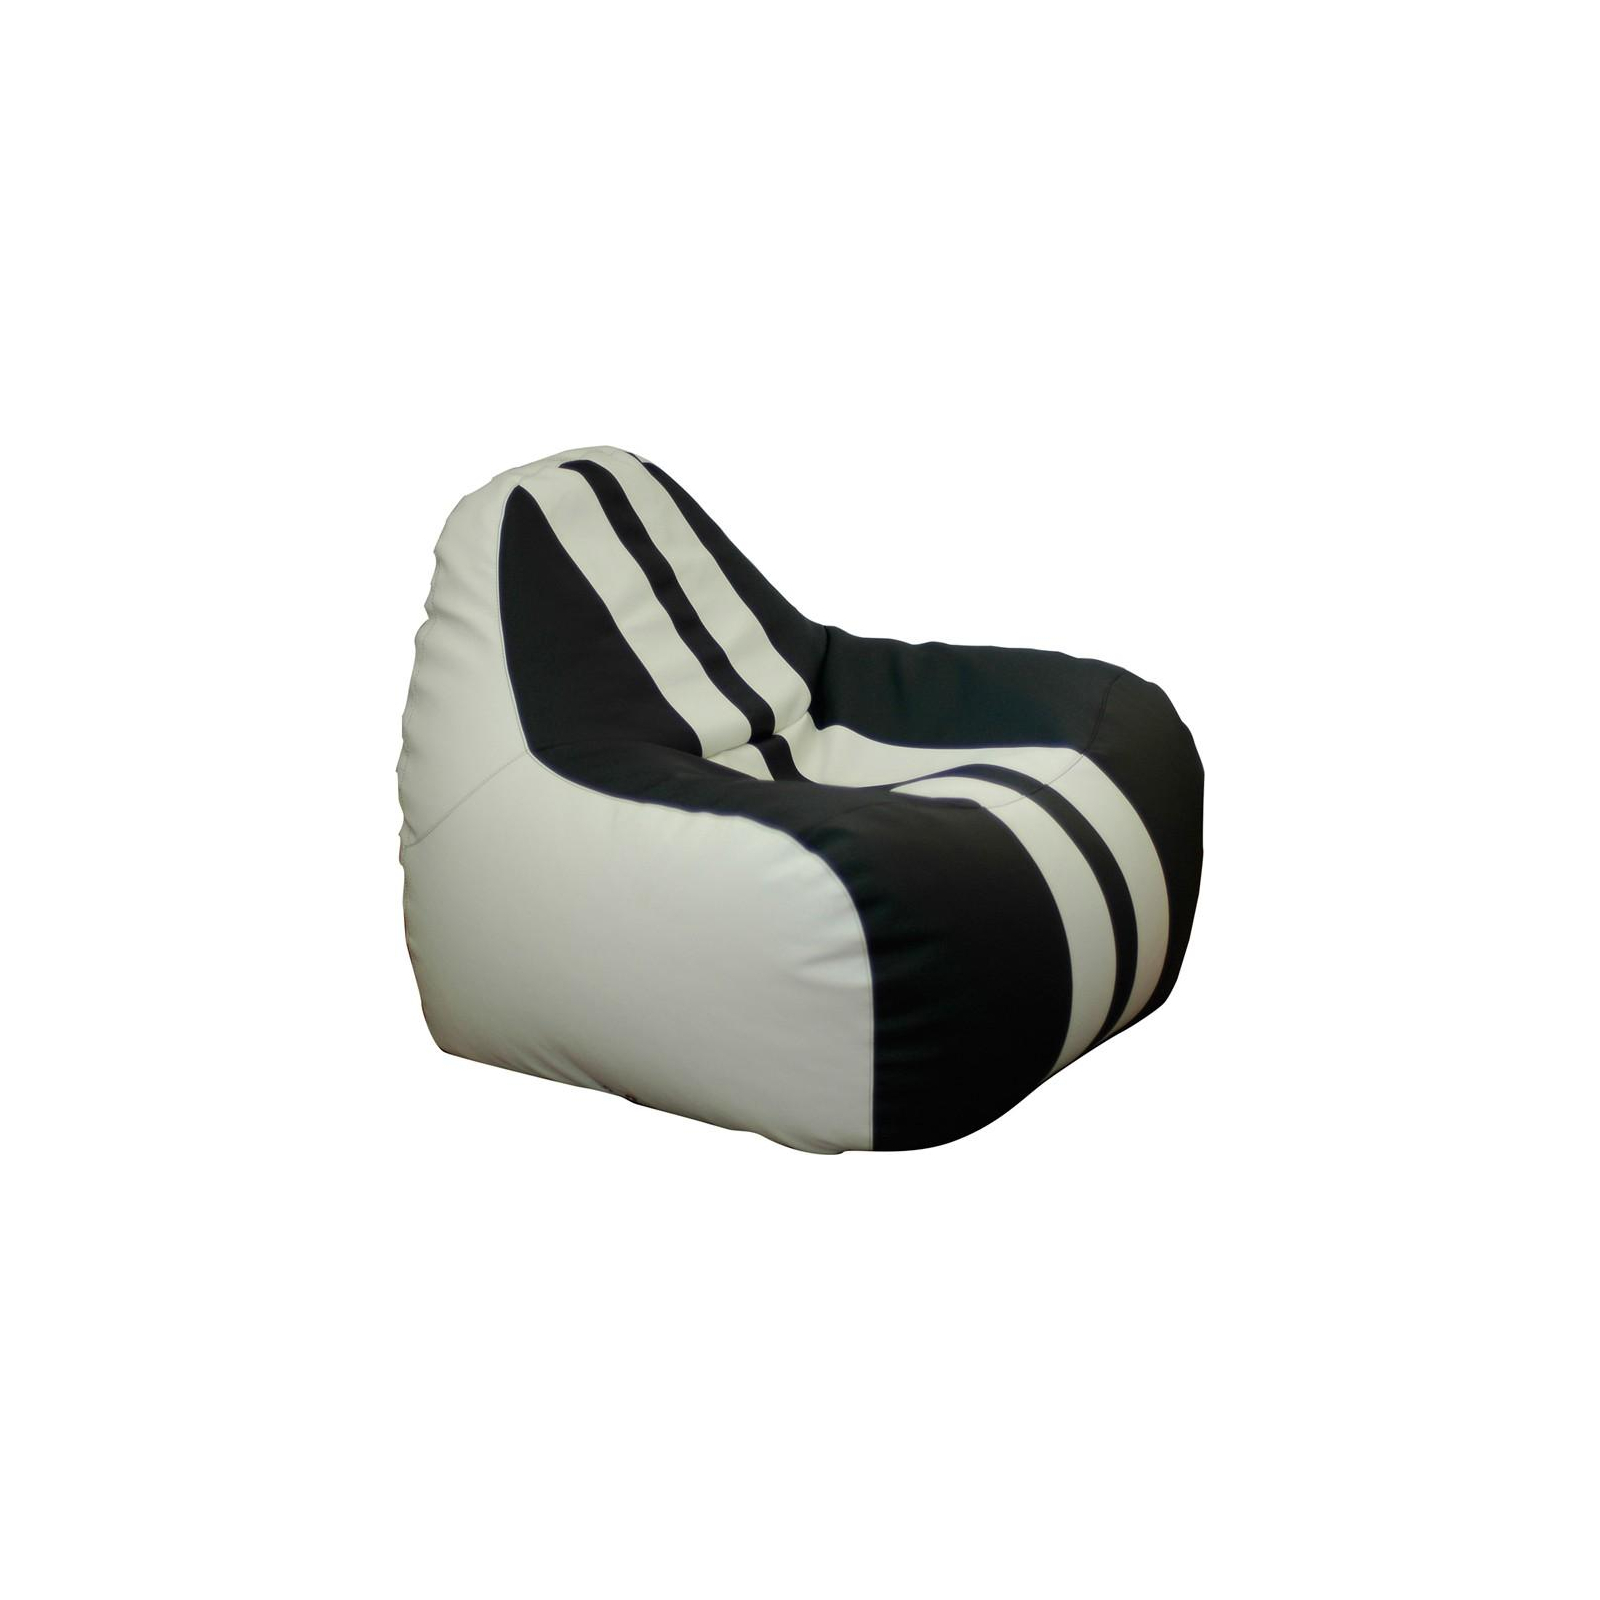 Кресло-мешок Примтекс плюс кресло-груша Simba Sport H-2200/D-5 M White-Black (Simba Sport H-2200/D-5 M)